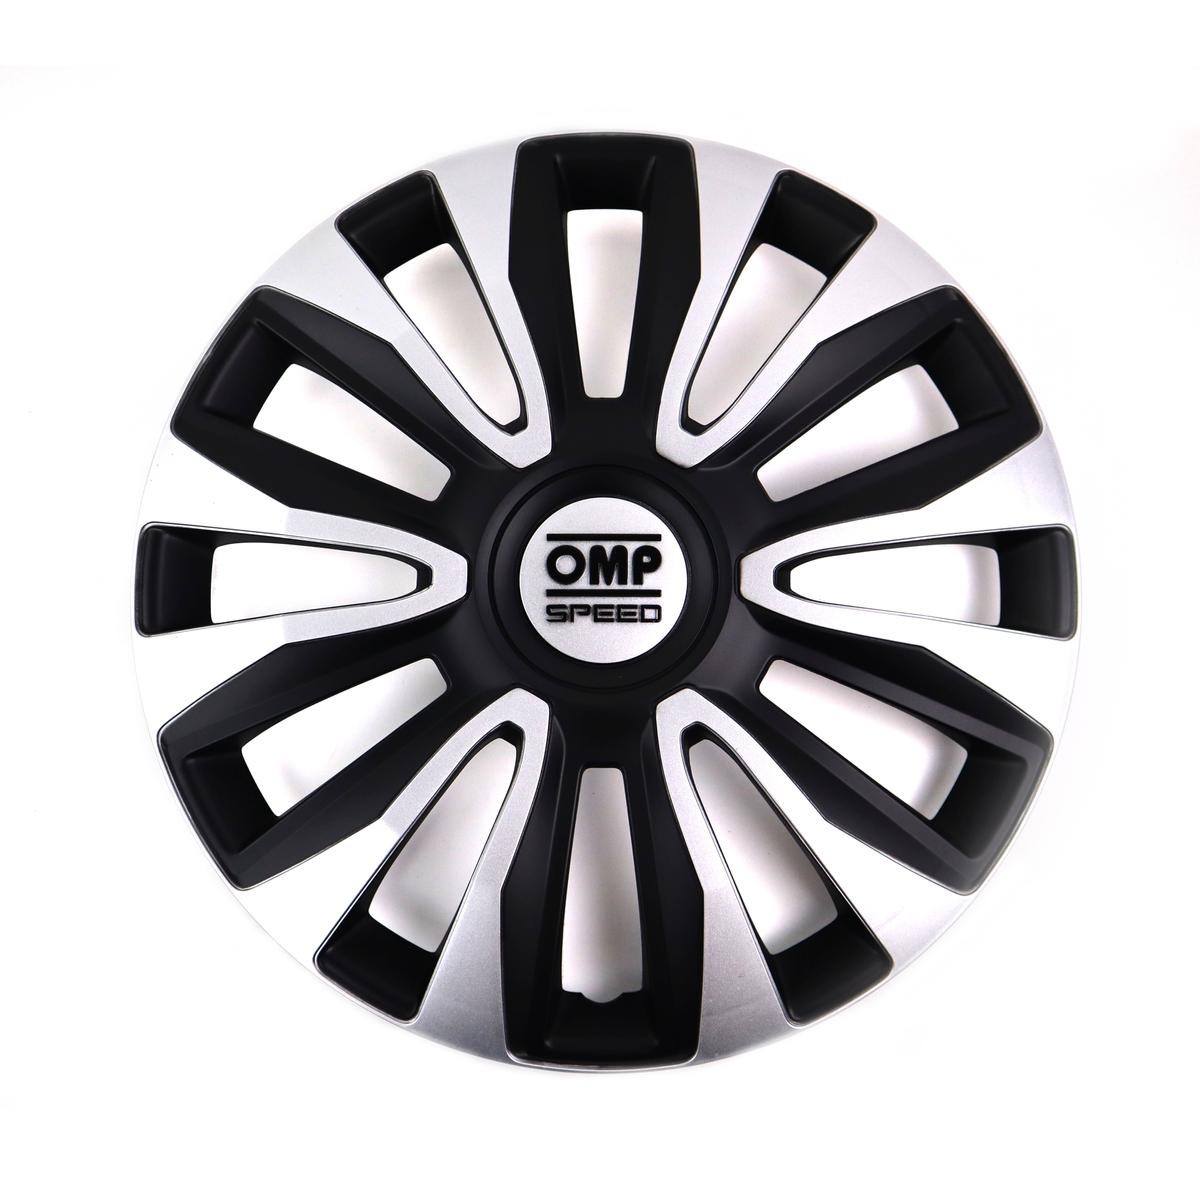 OMP OMPS07011412 Car wheel trims MERCEDES-BENZ C-Class Saloon (W204) 14 Inch black, silver